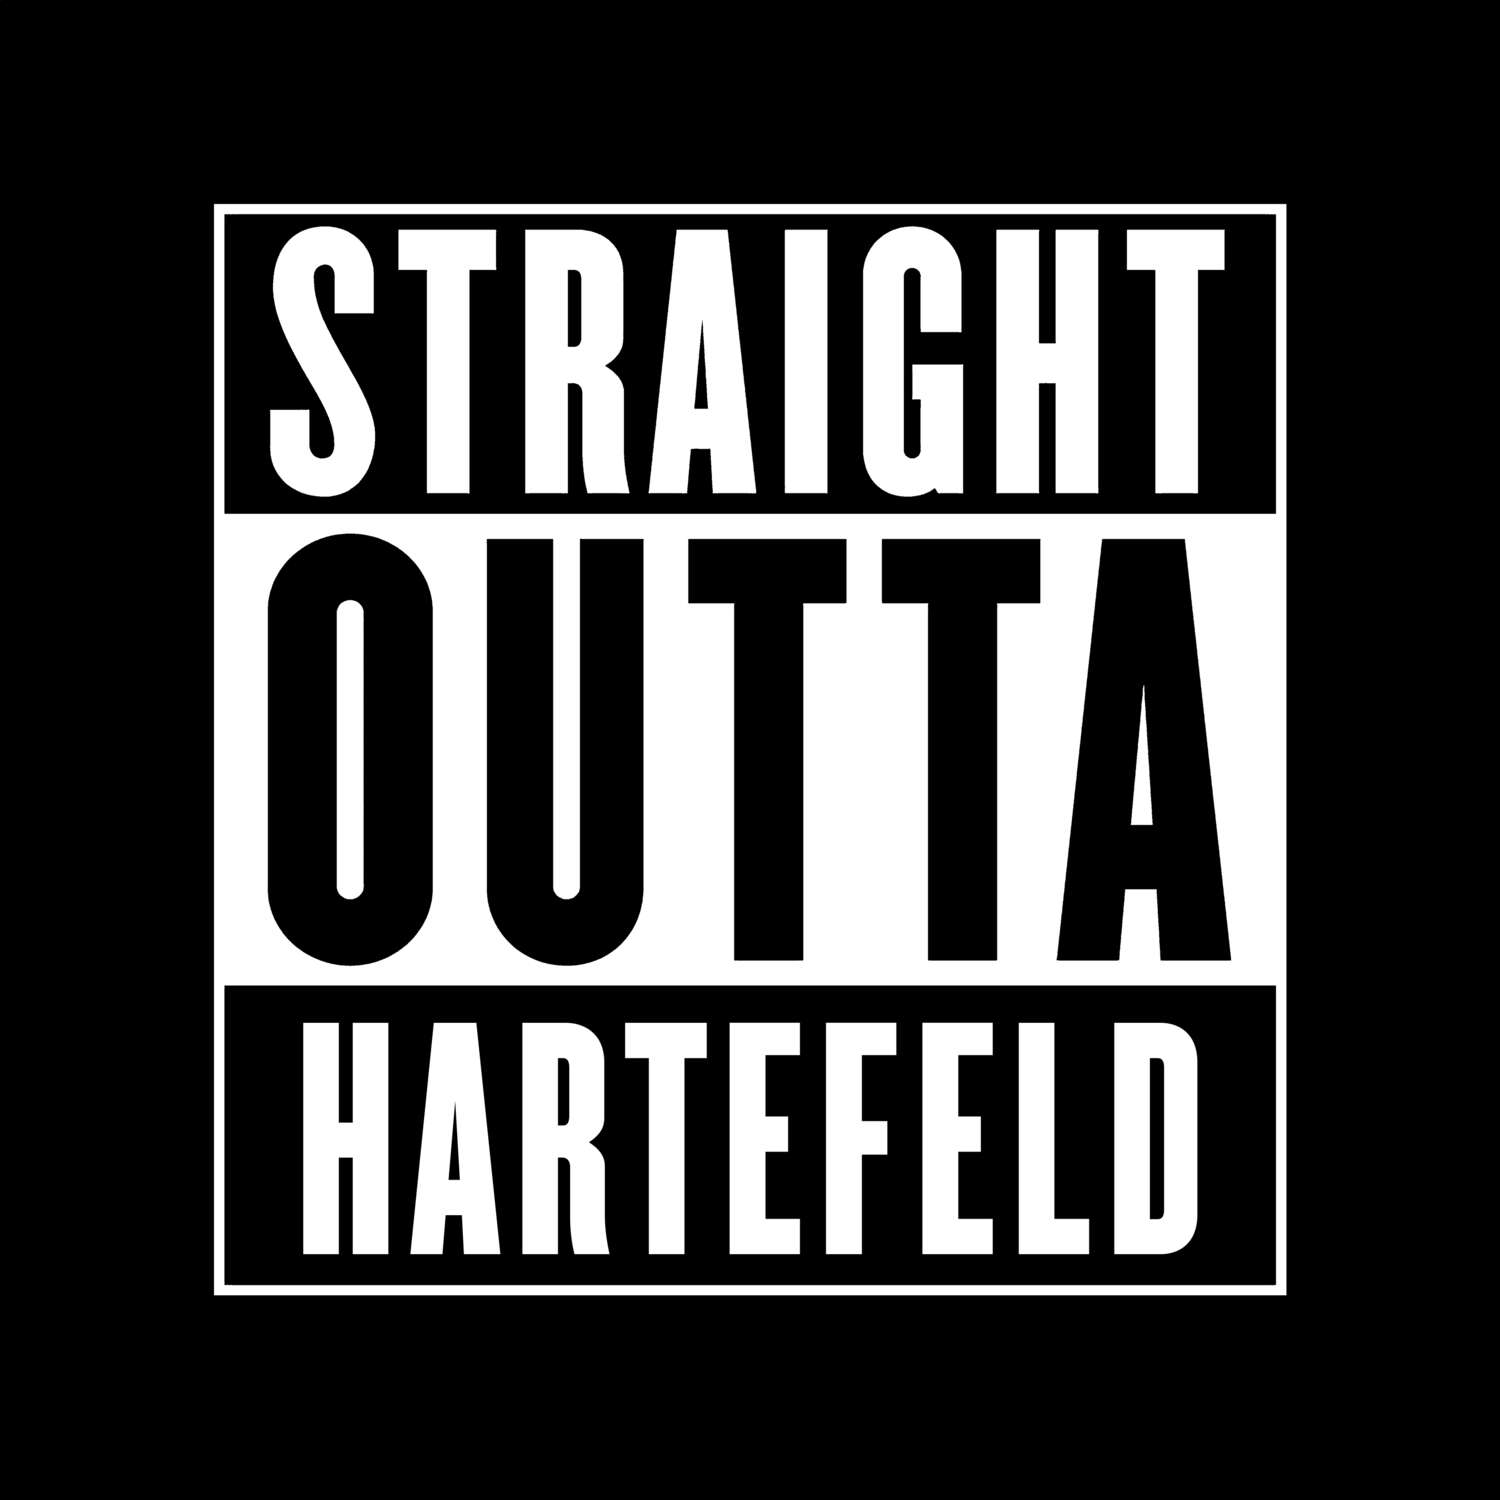 Hartefeld T-Shirt »Straight Outta«